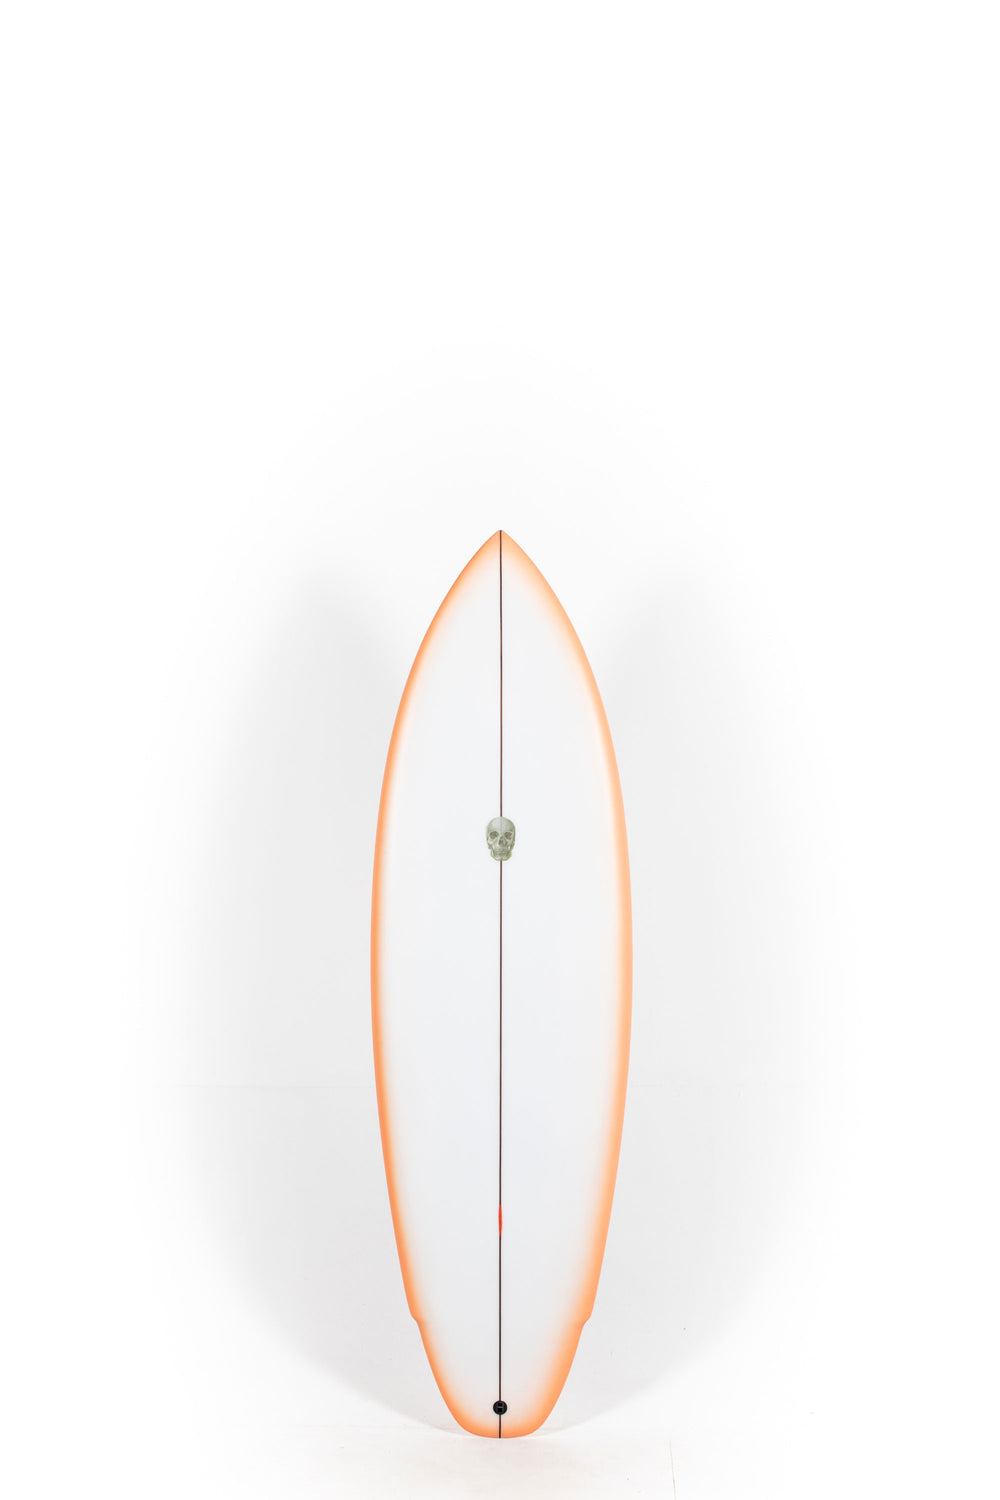 Pukas Surf Shop - Christenson Surfboards - LANE SPLITTER - 5'8